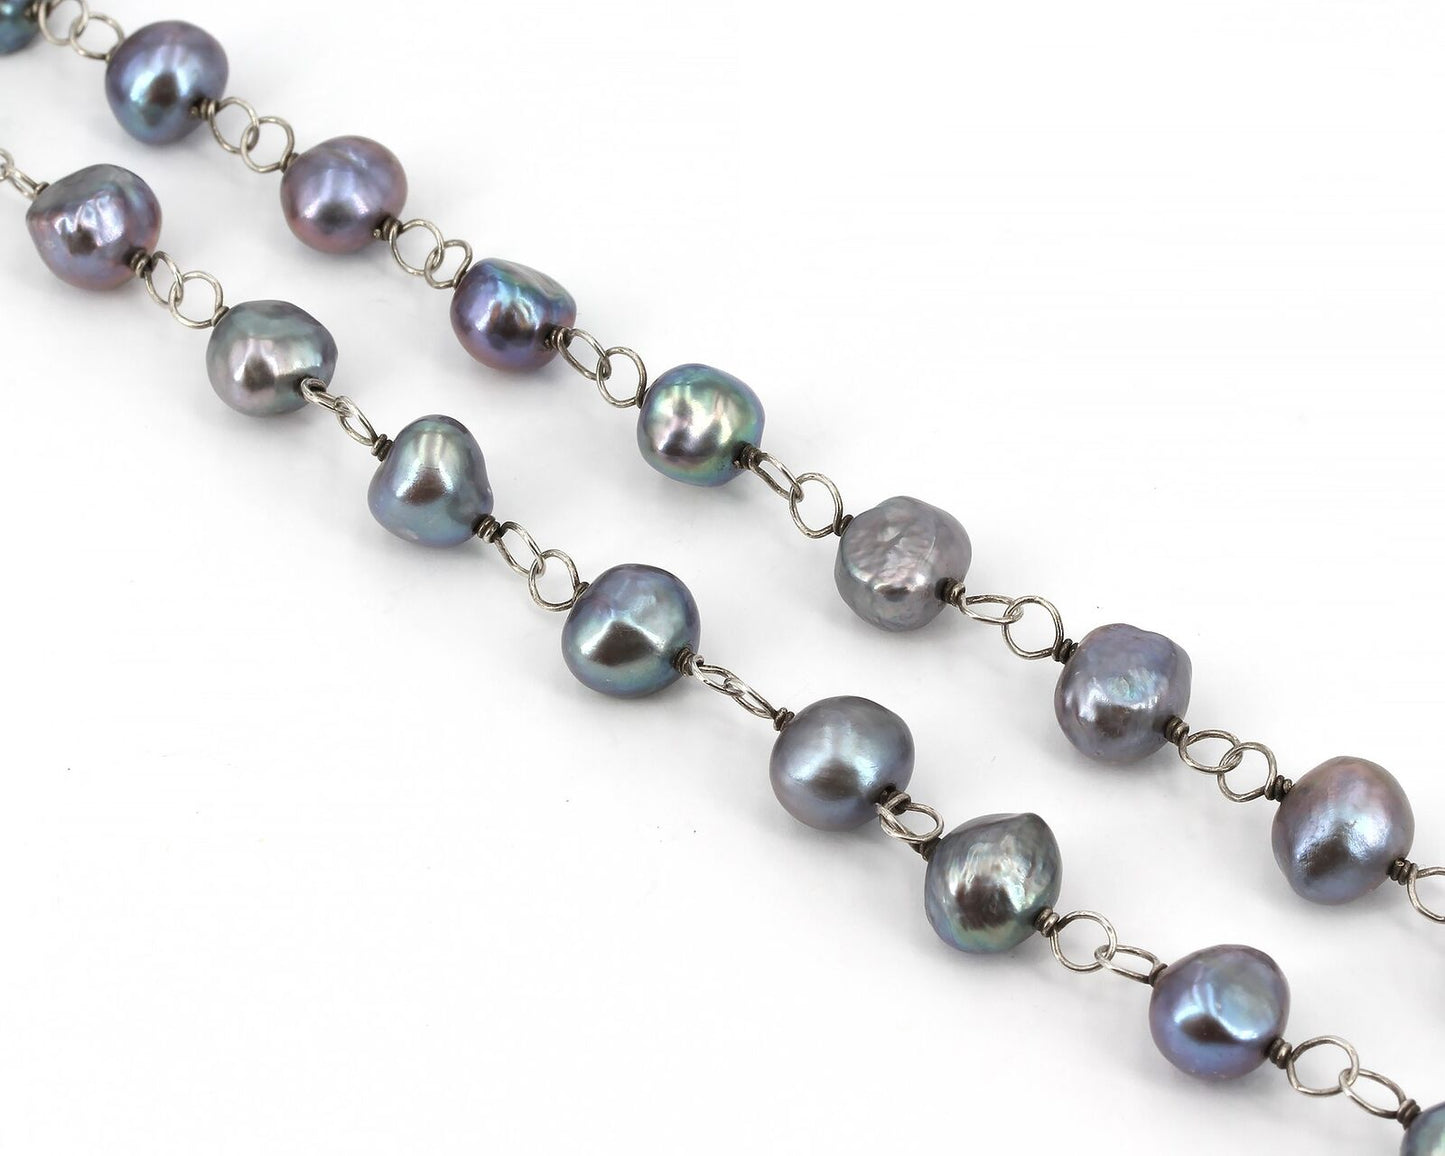 Retired Silpada Sterling Silver Gray Pearl Necklace & Bracelet Set N1800 B1182